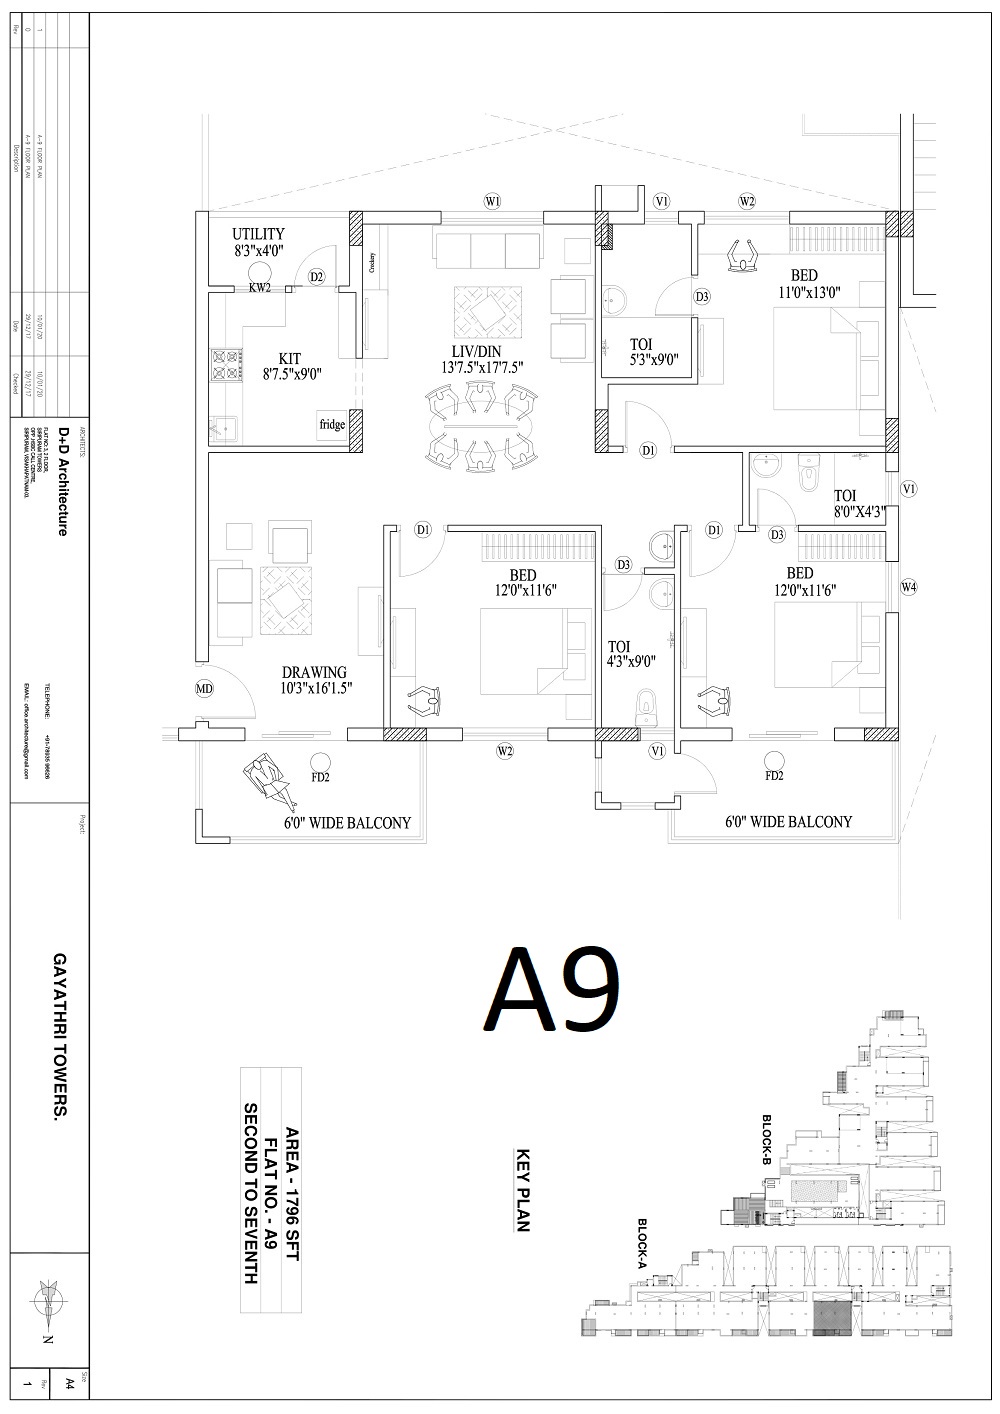 A9 - Tipcal Floor Plan